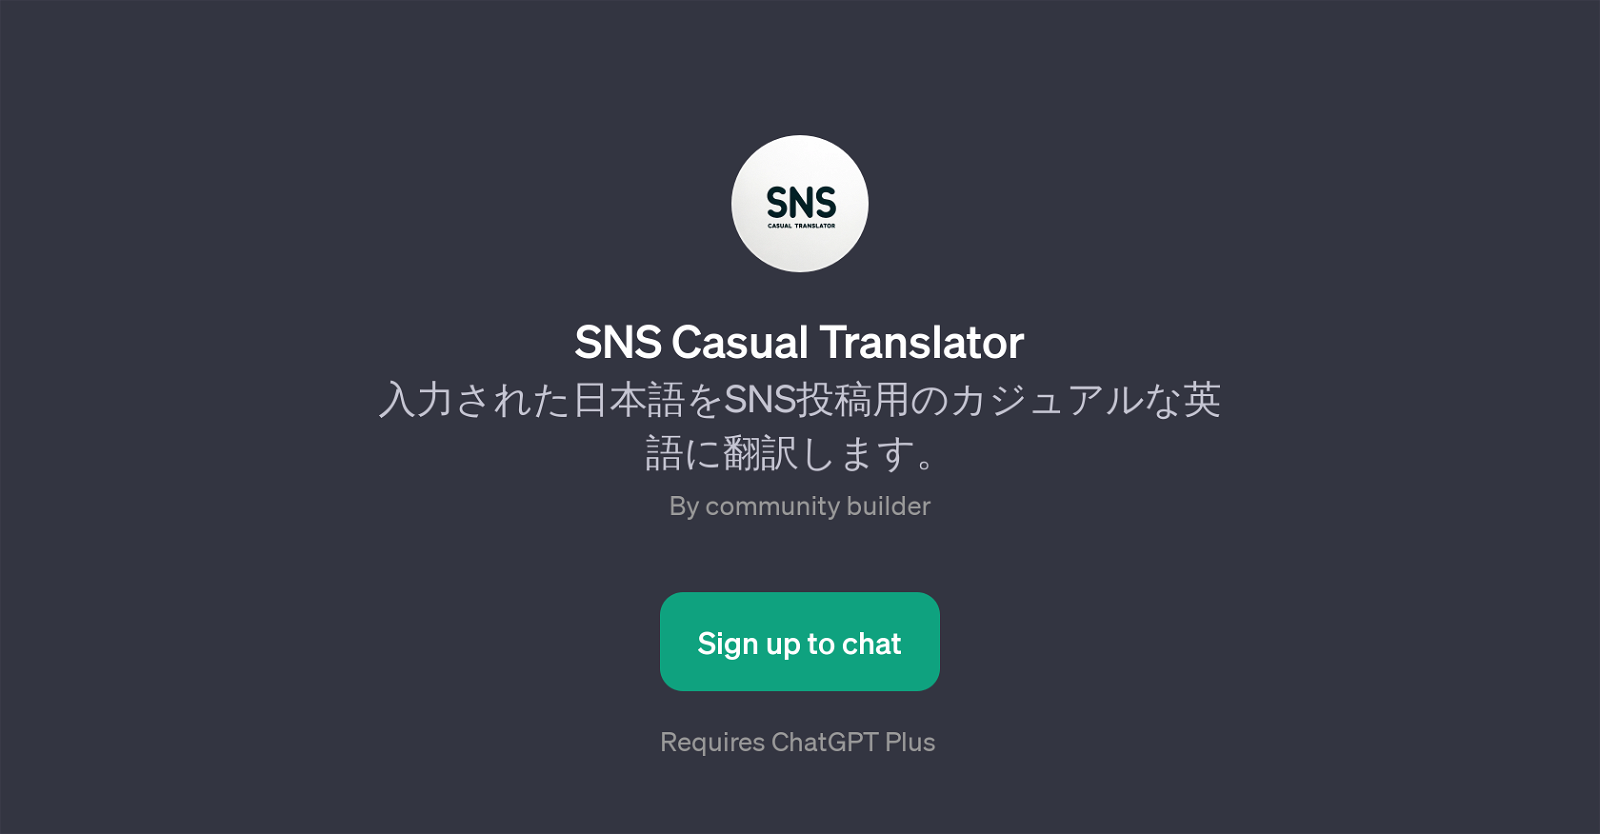 SNS Casual Translator website